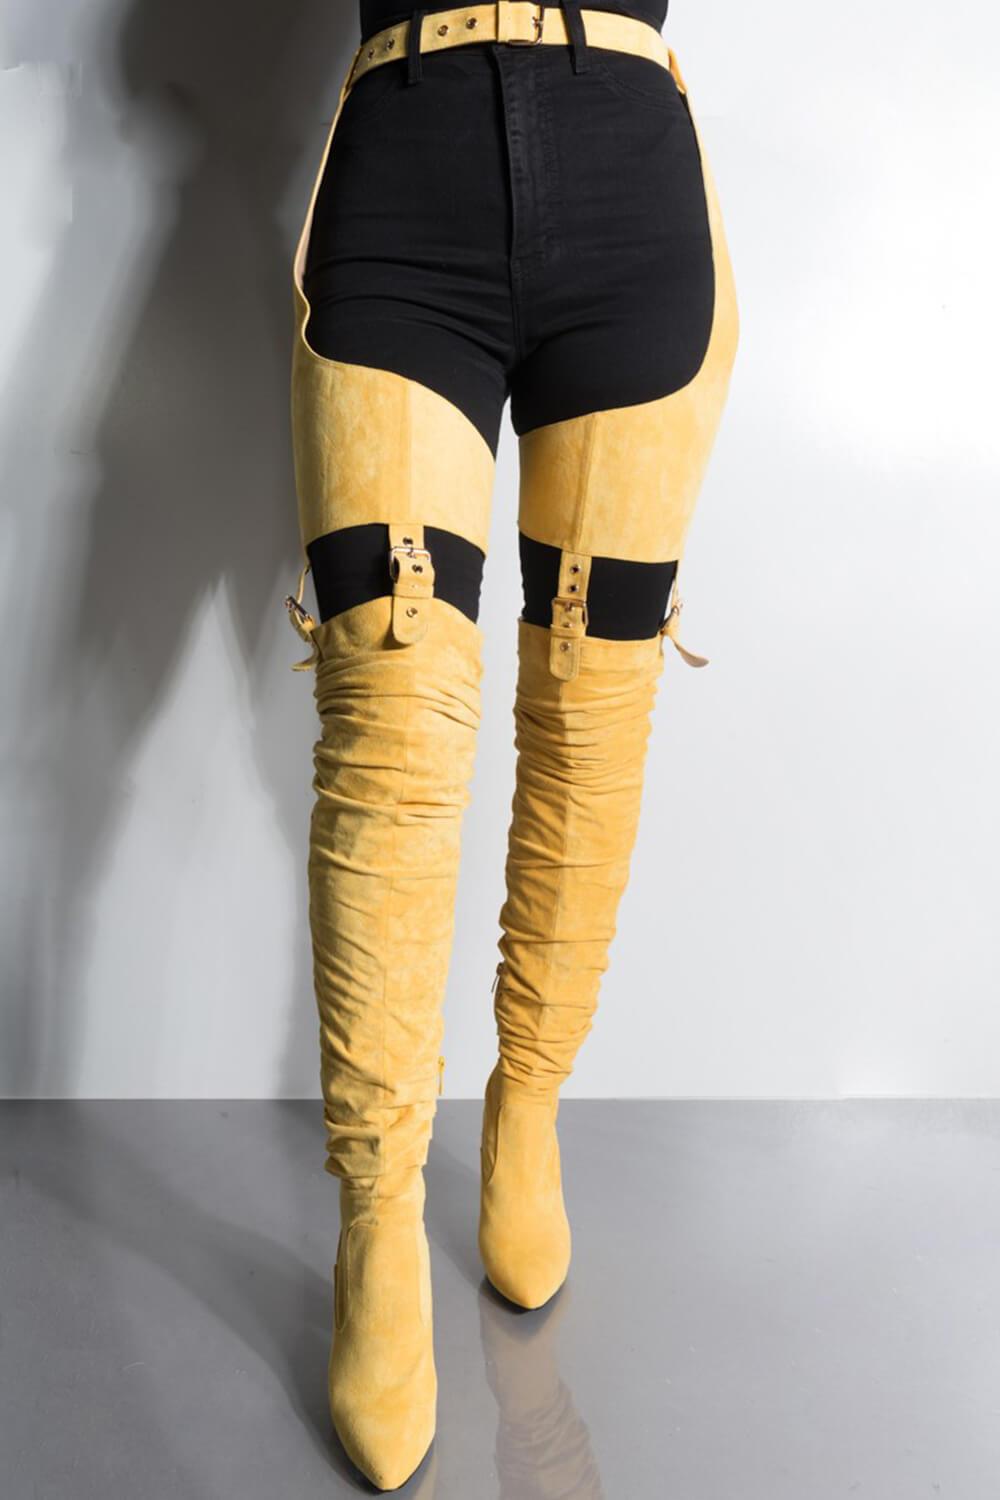 mustard yellow knee high boots